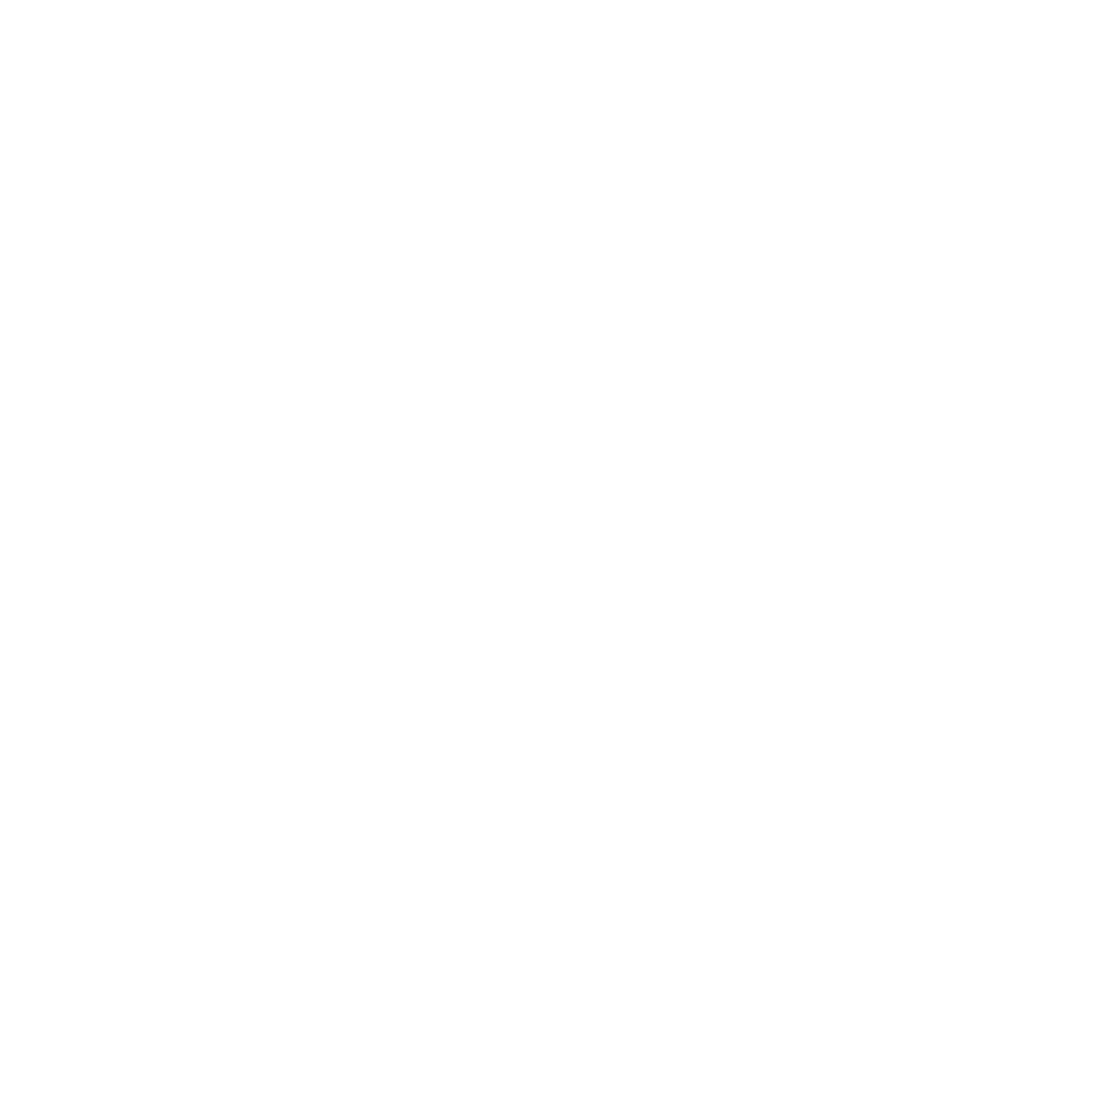 Partizanas